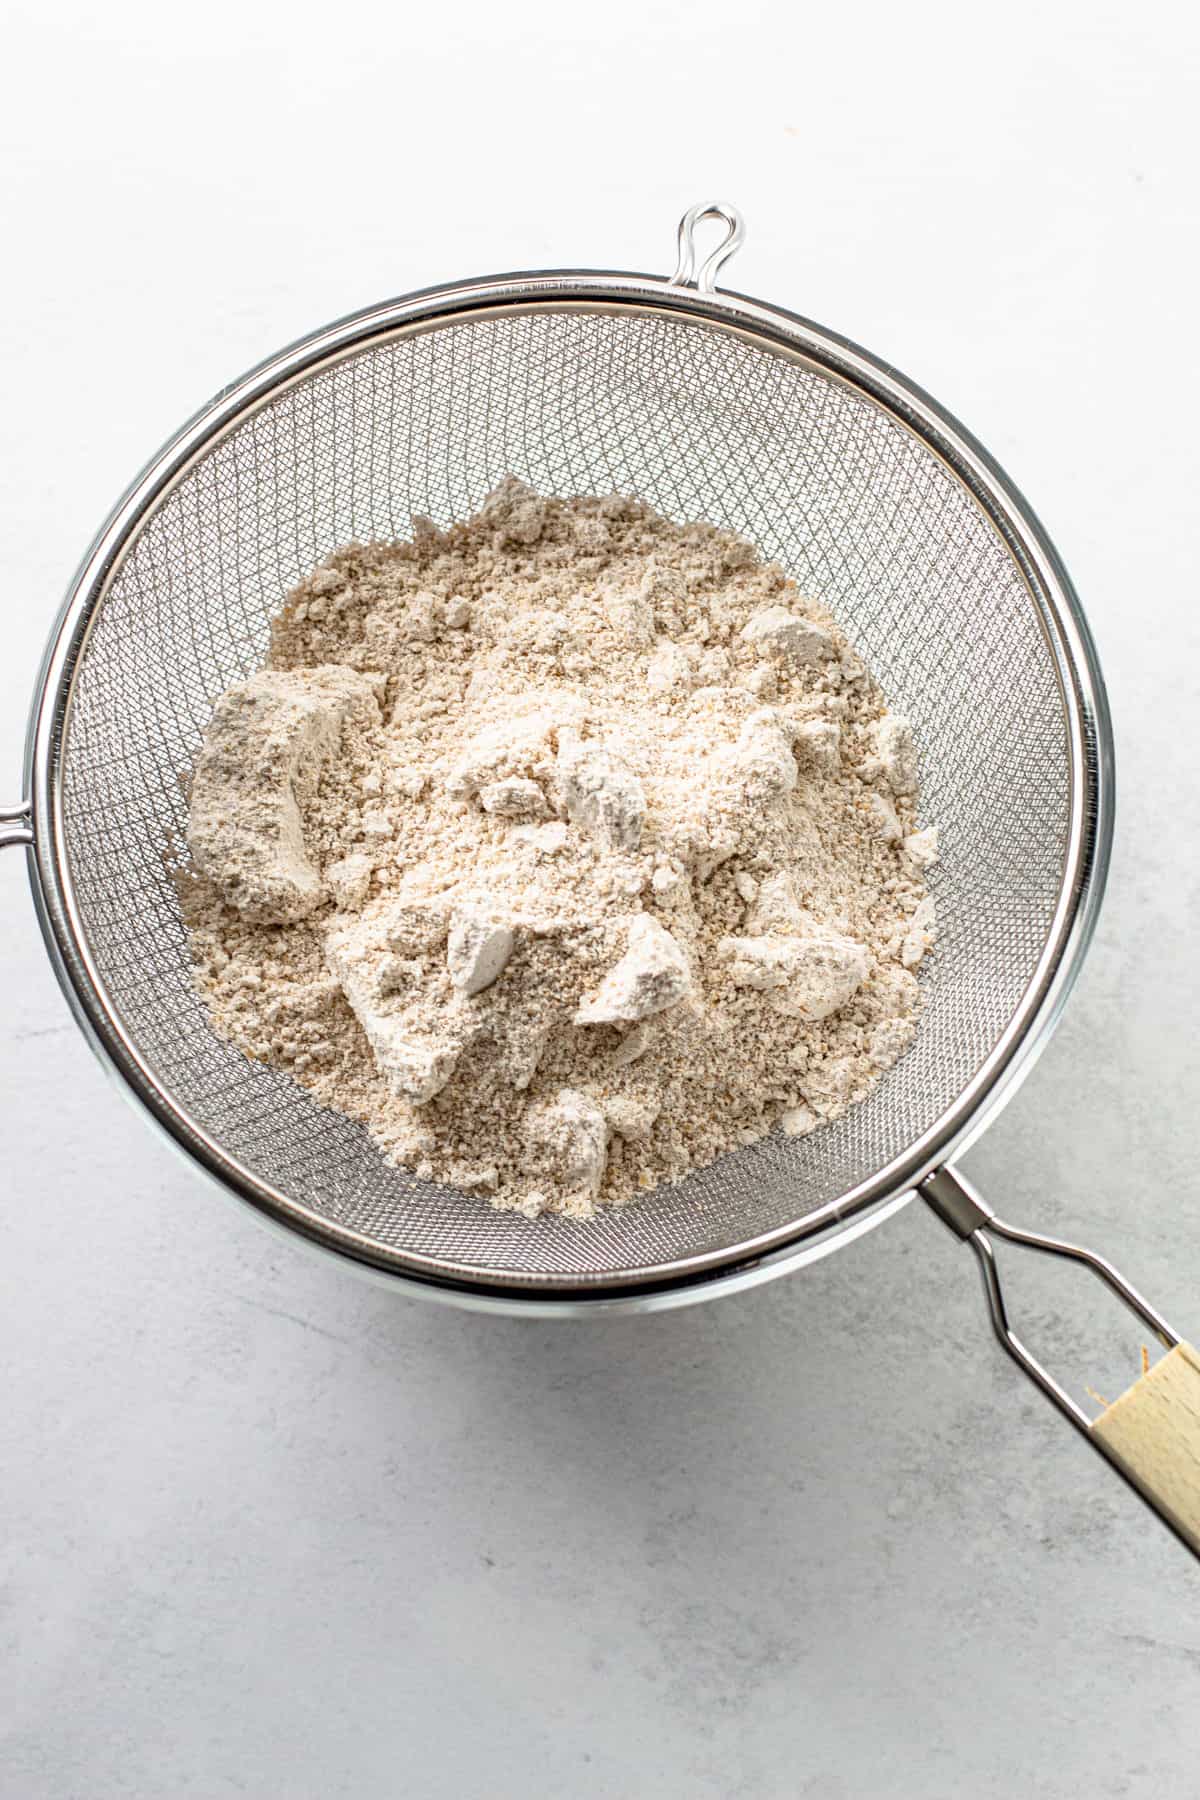 Sifting oat flour.